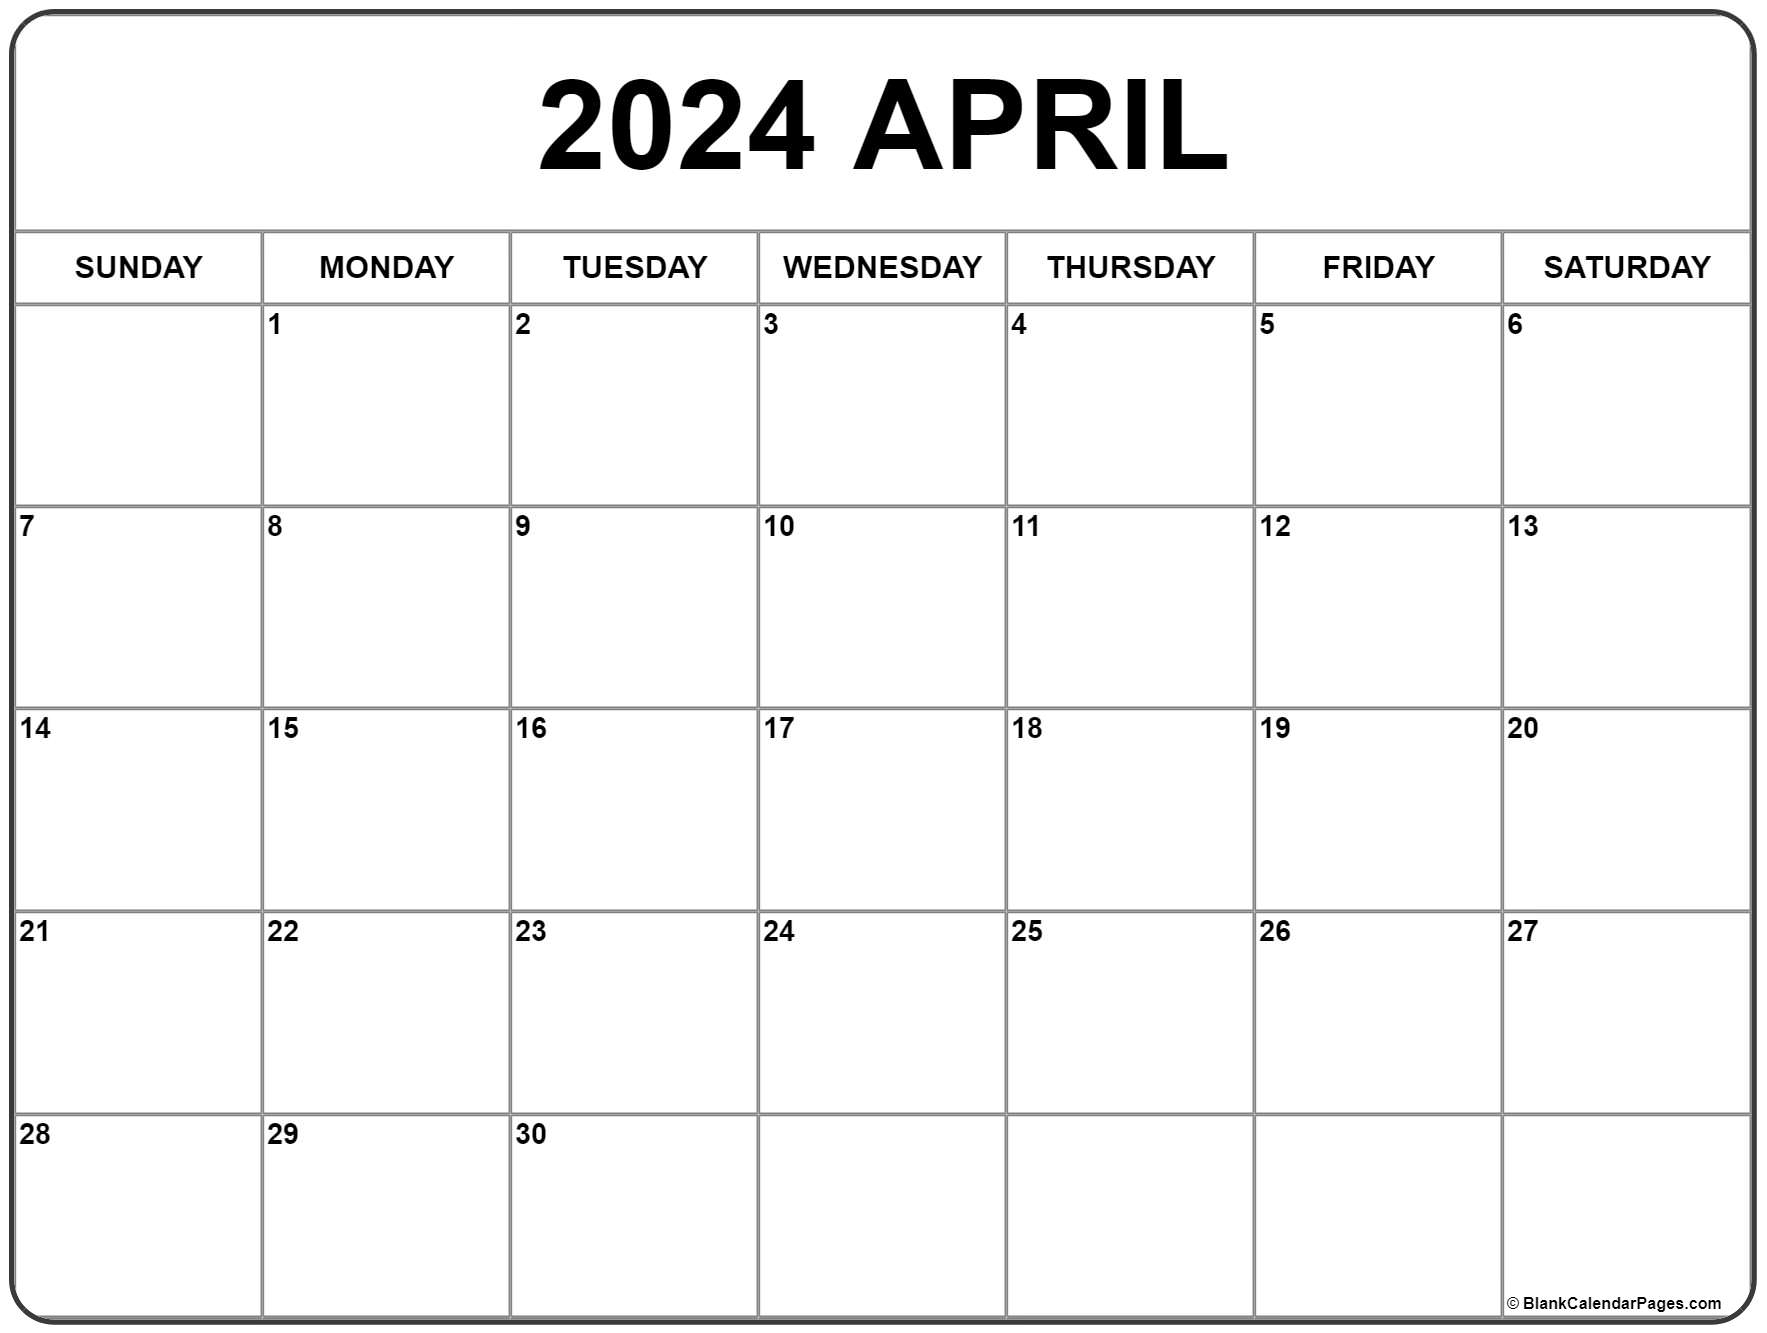 April 2024 Calendar | Free Printable Calendar in Calendar For April 2024